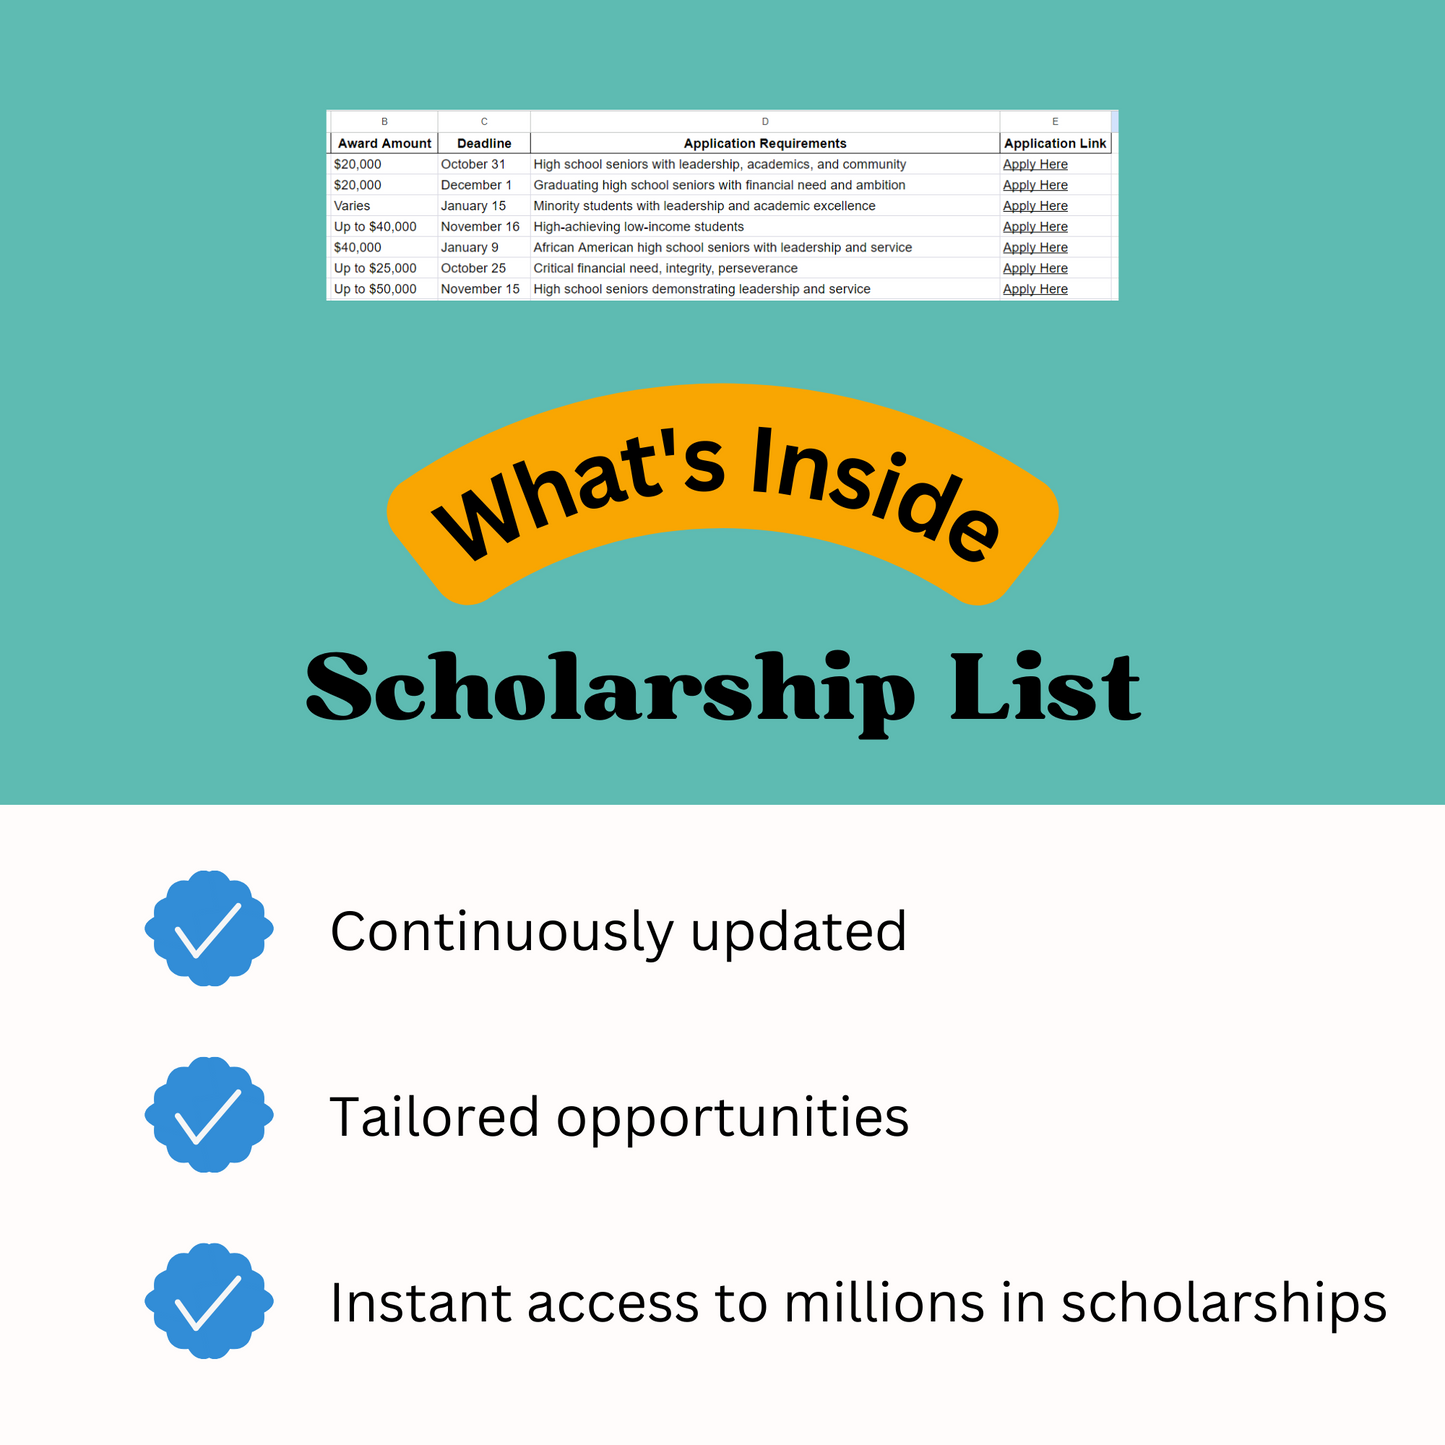 The Million Dollar Scholarship List